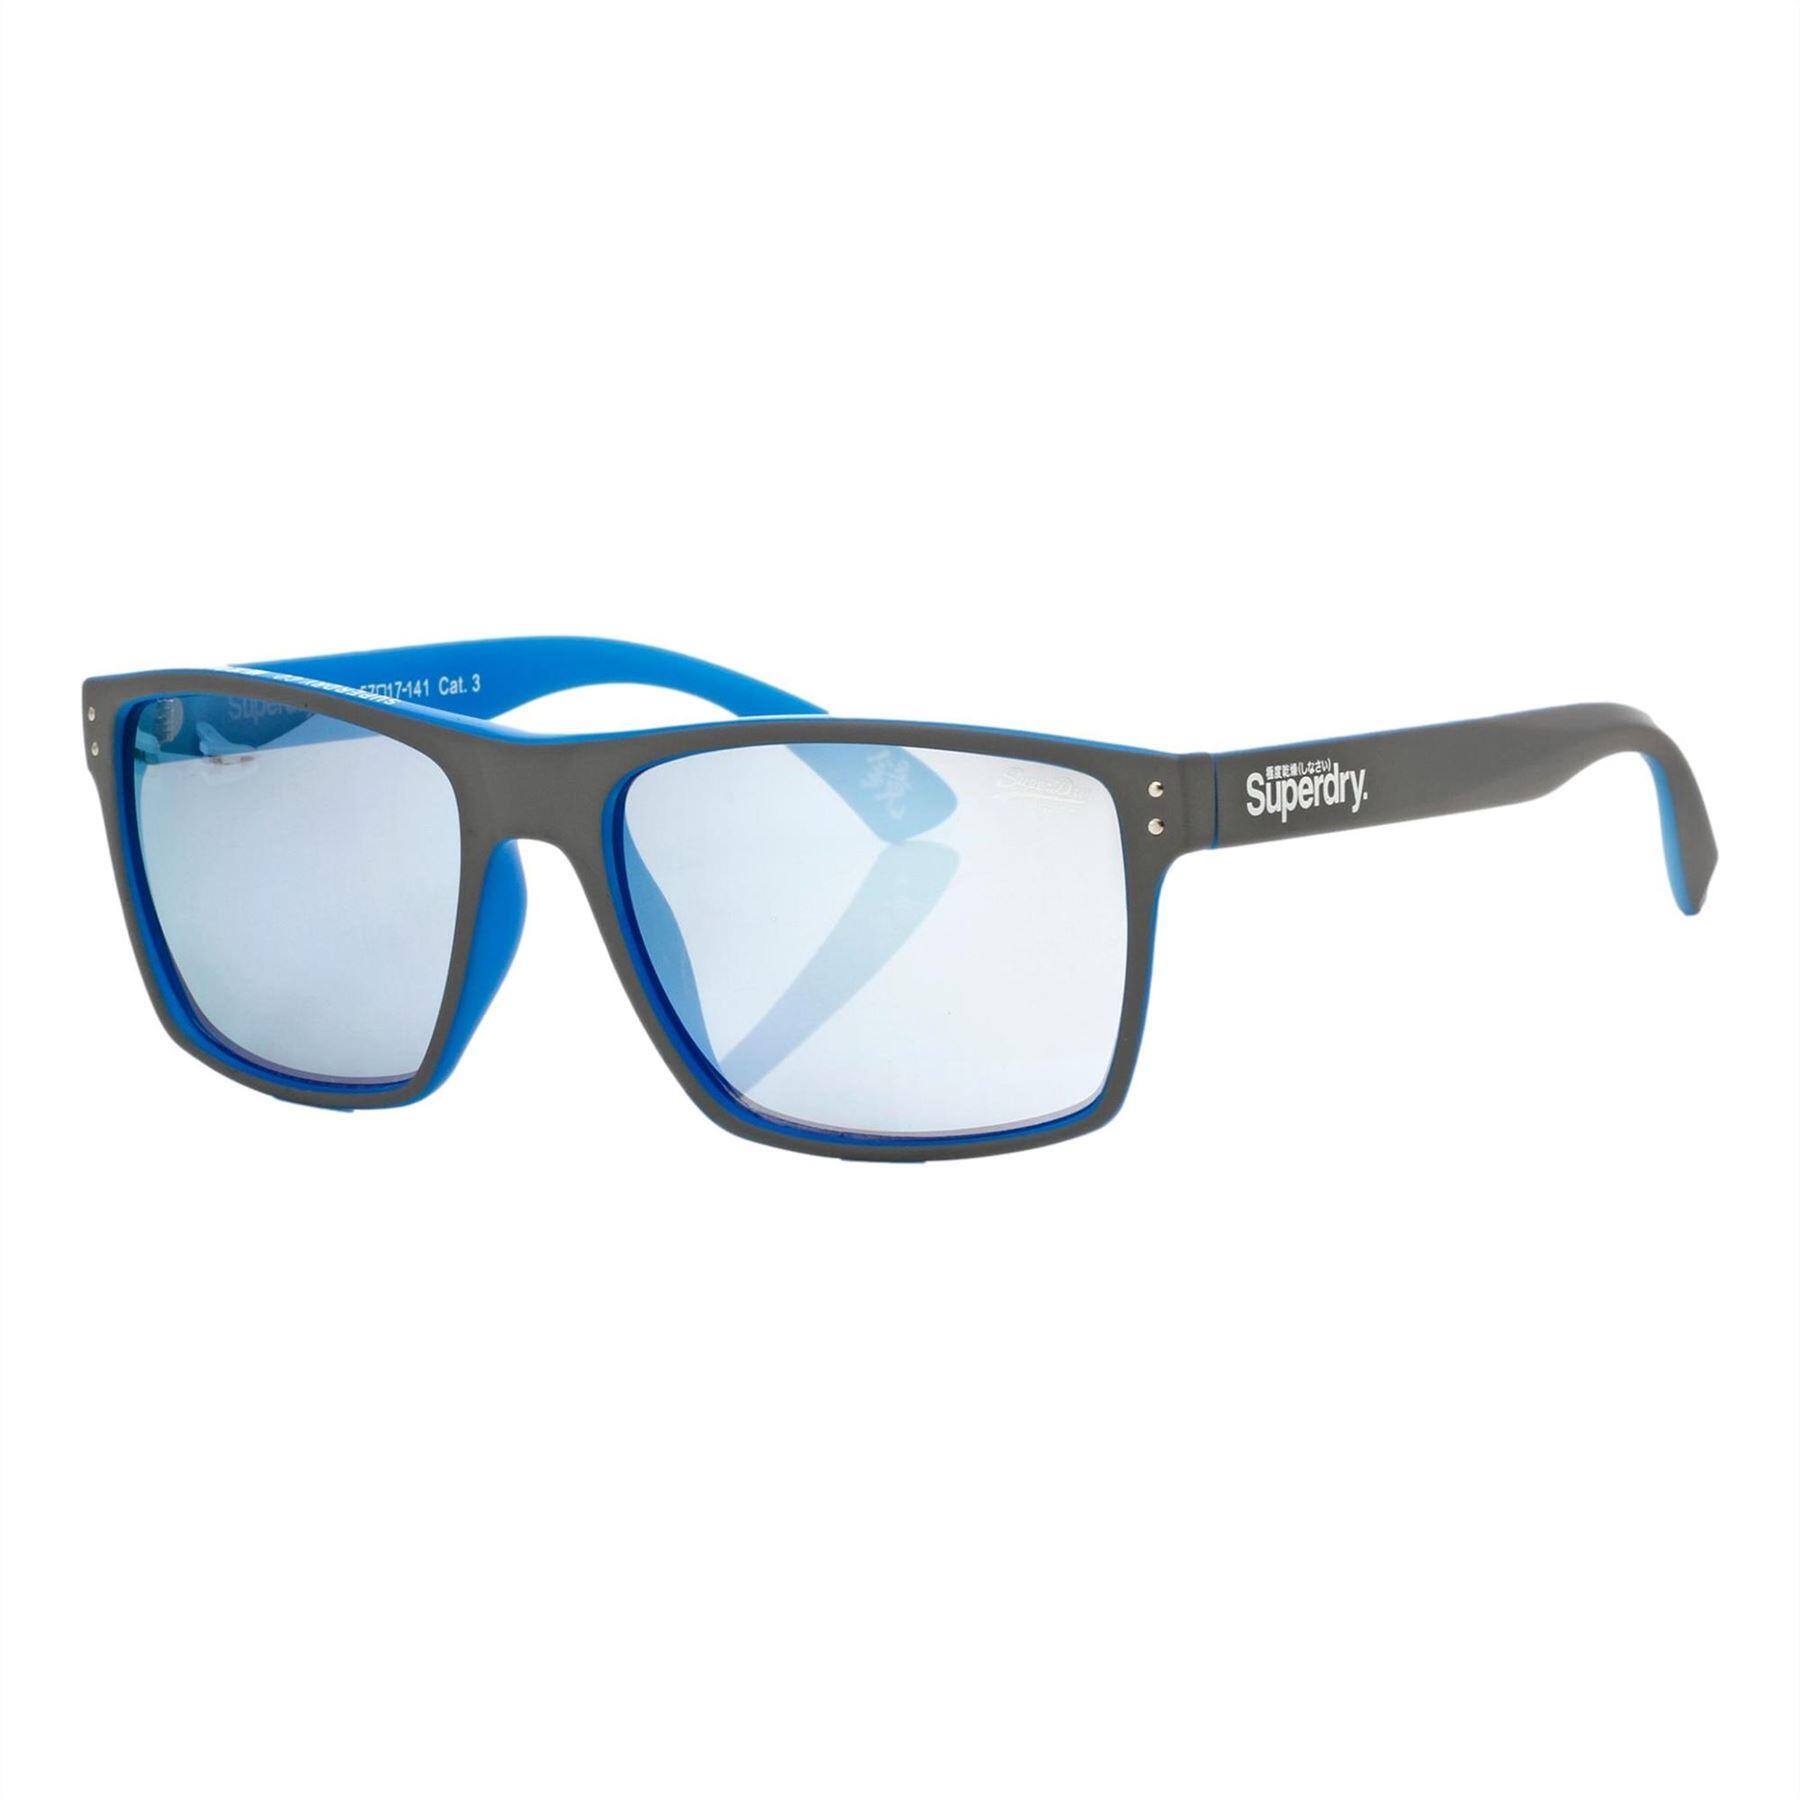 Superdry Kobe Sunglasses - Matte Navy 1/2